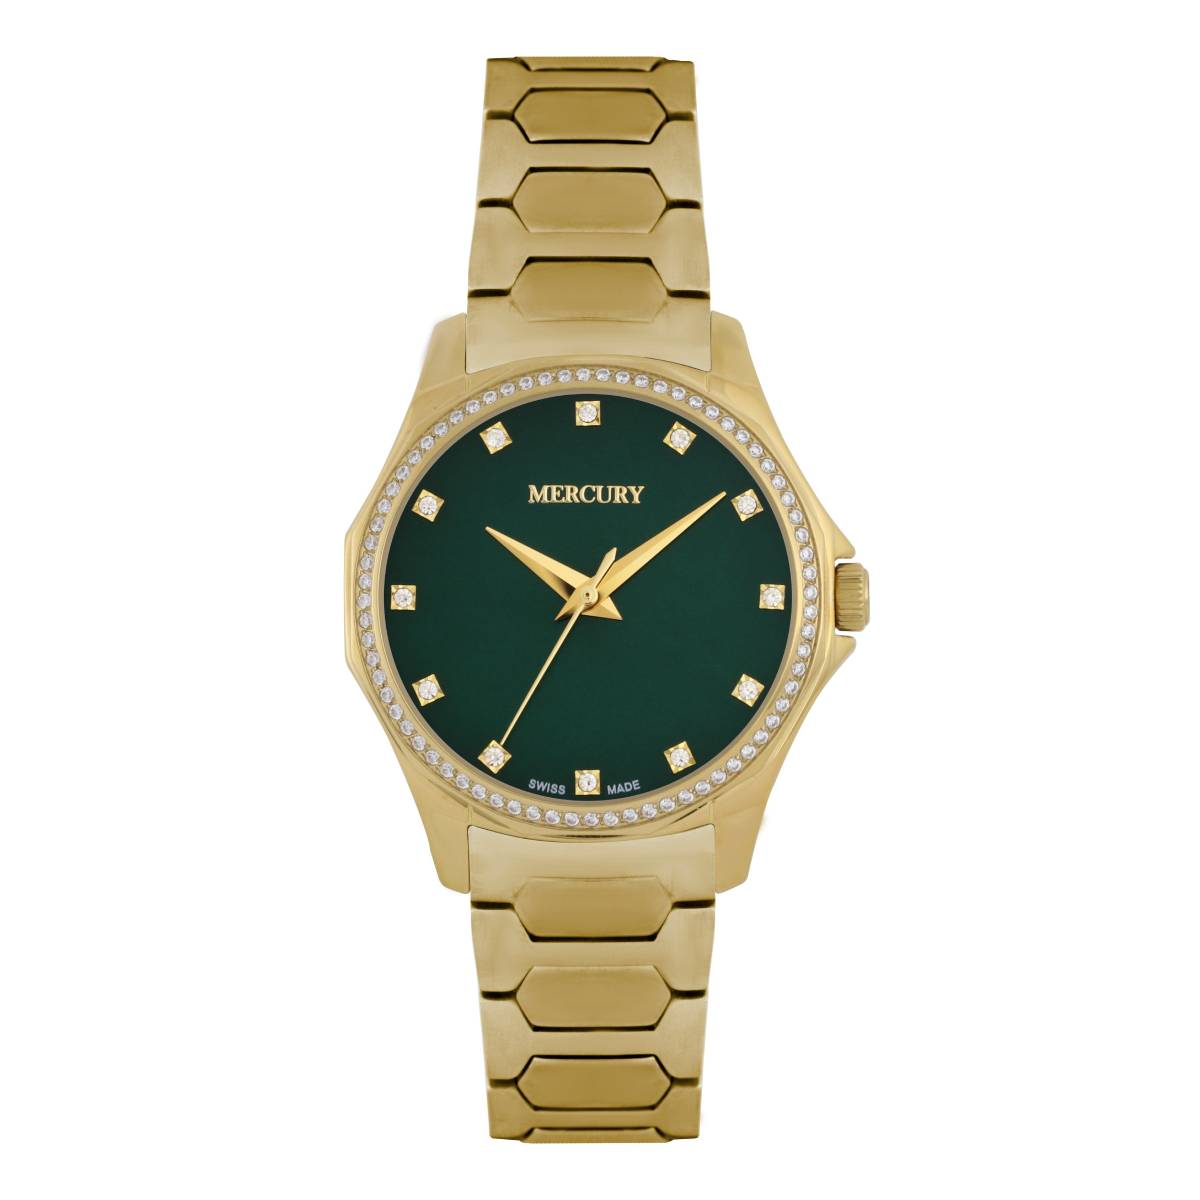 Mercury Women's Swiss Quartz Watch with Green Dial - MER-0019